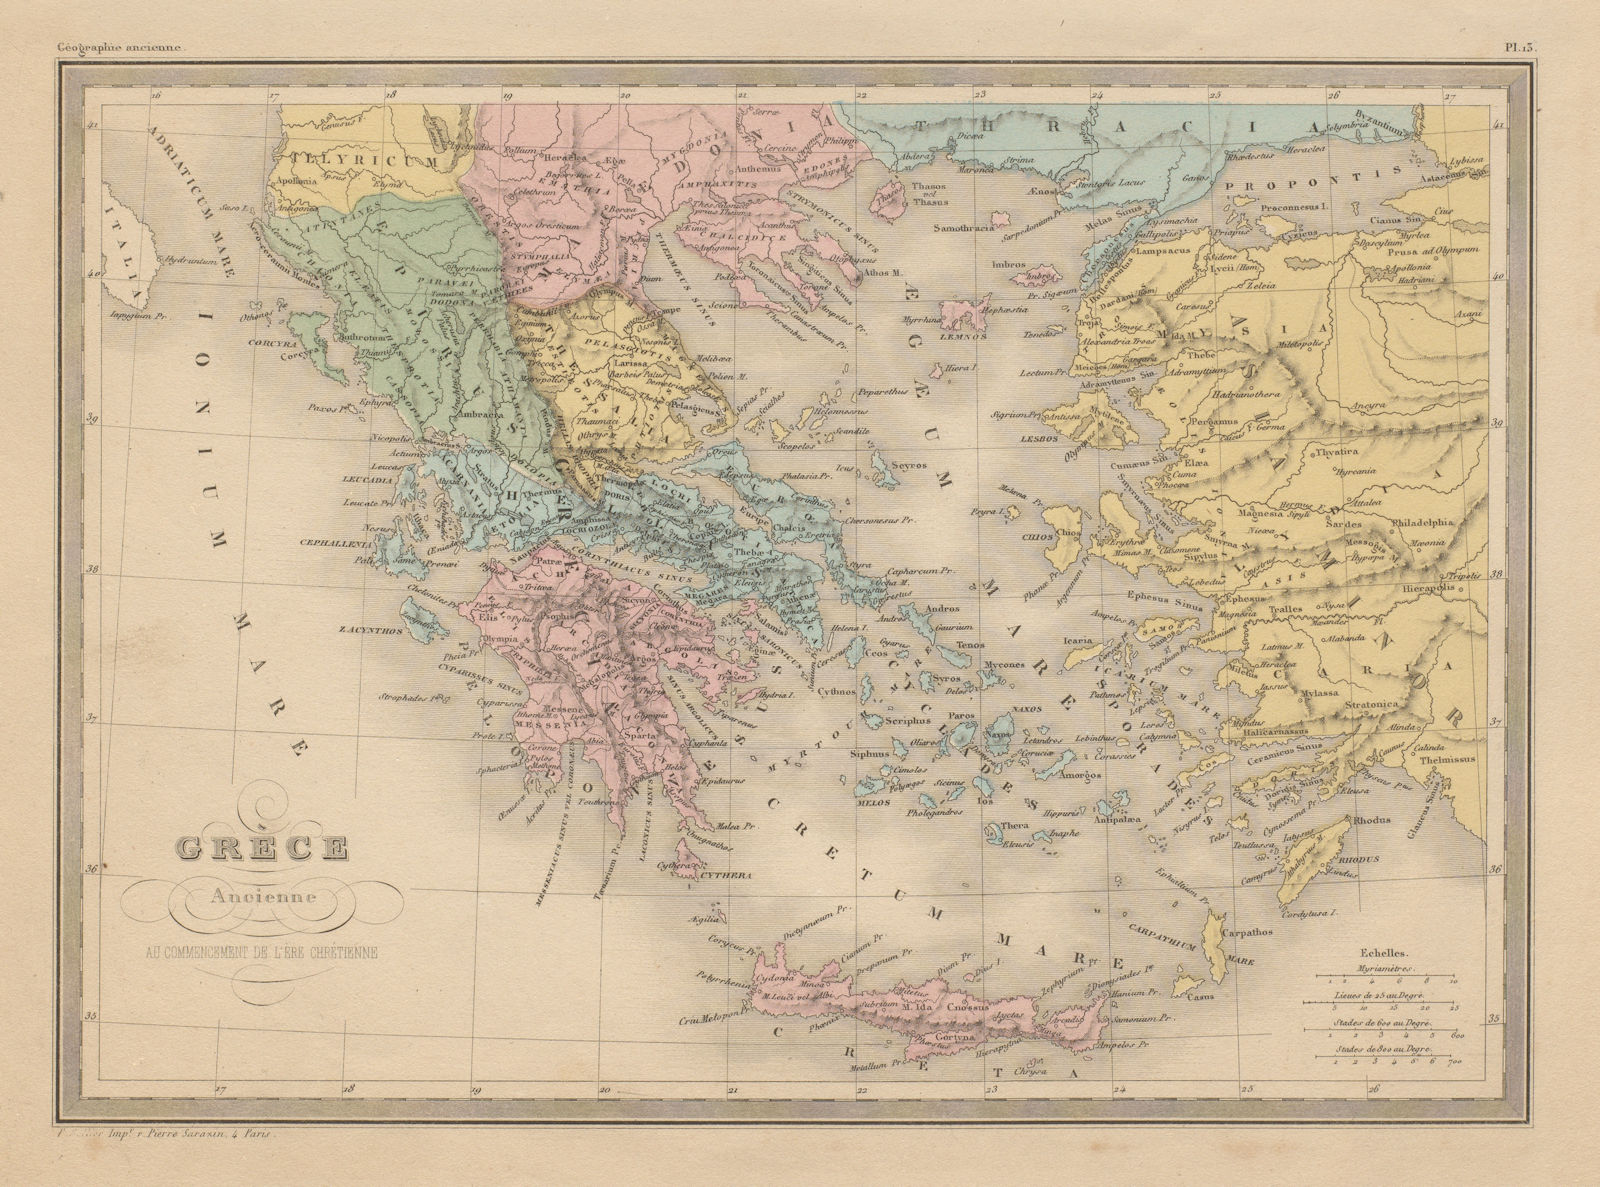 Grèce Ancienne. Ancient Greece at start of Christian era. MALTE-BRUN c1871 map